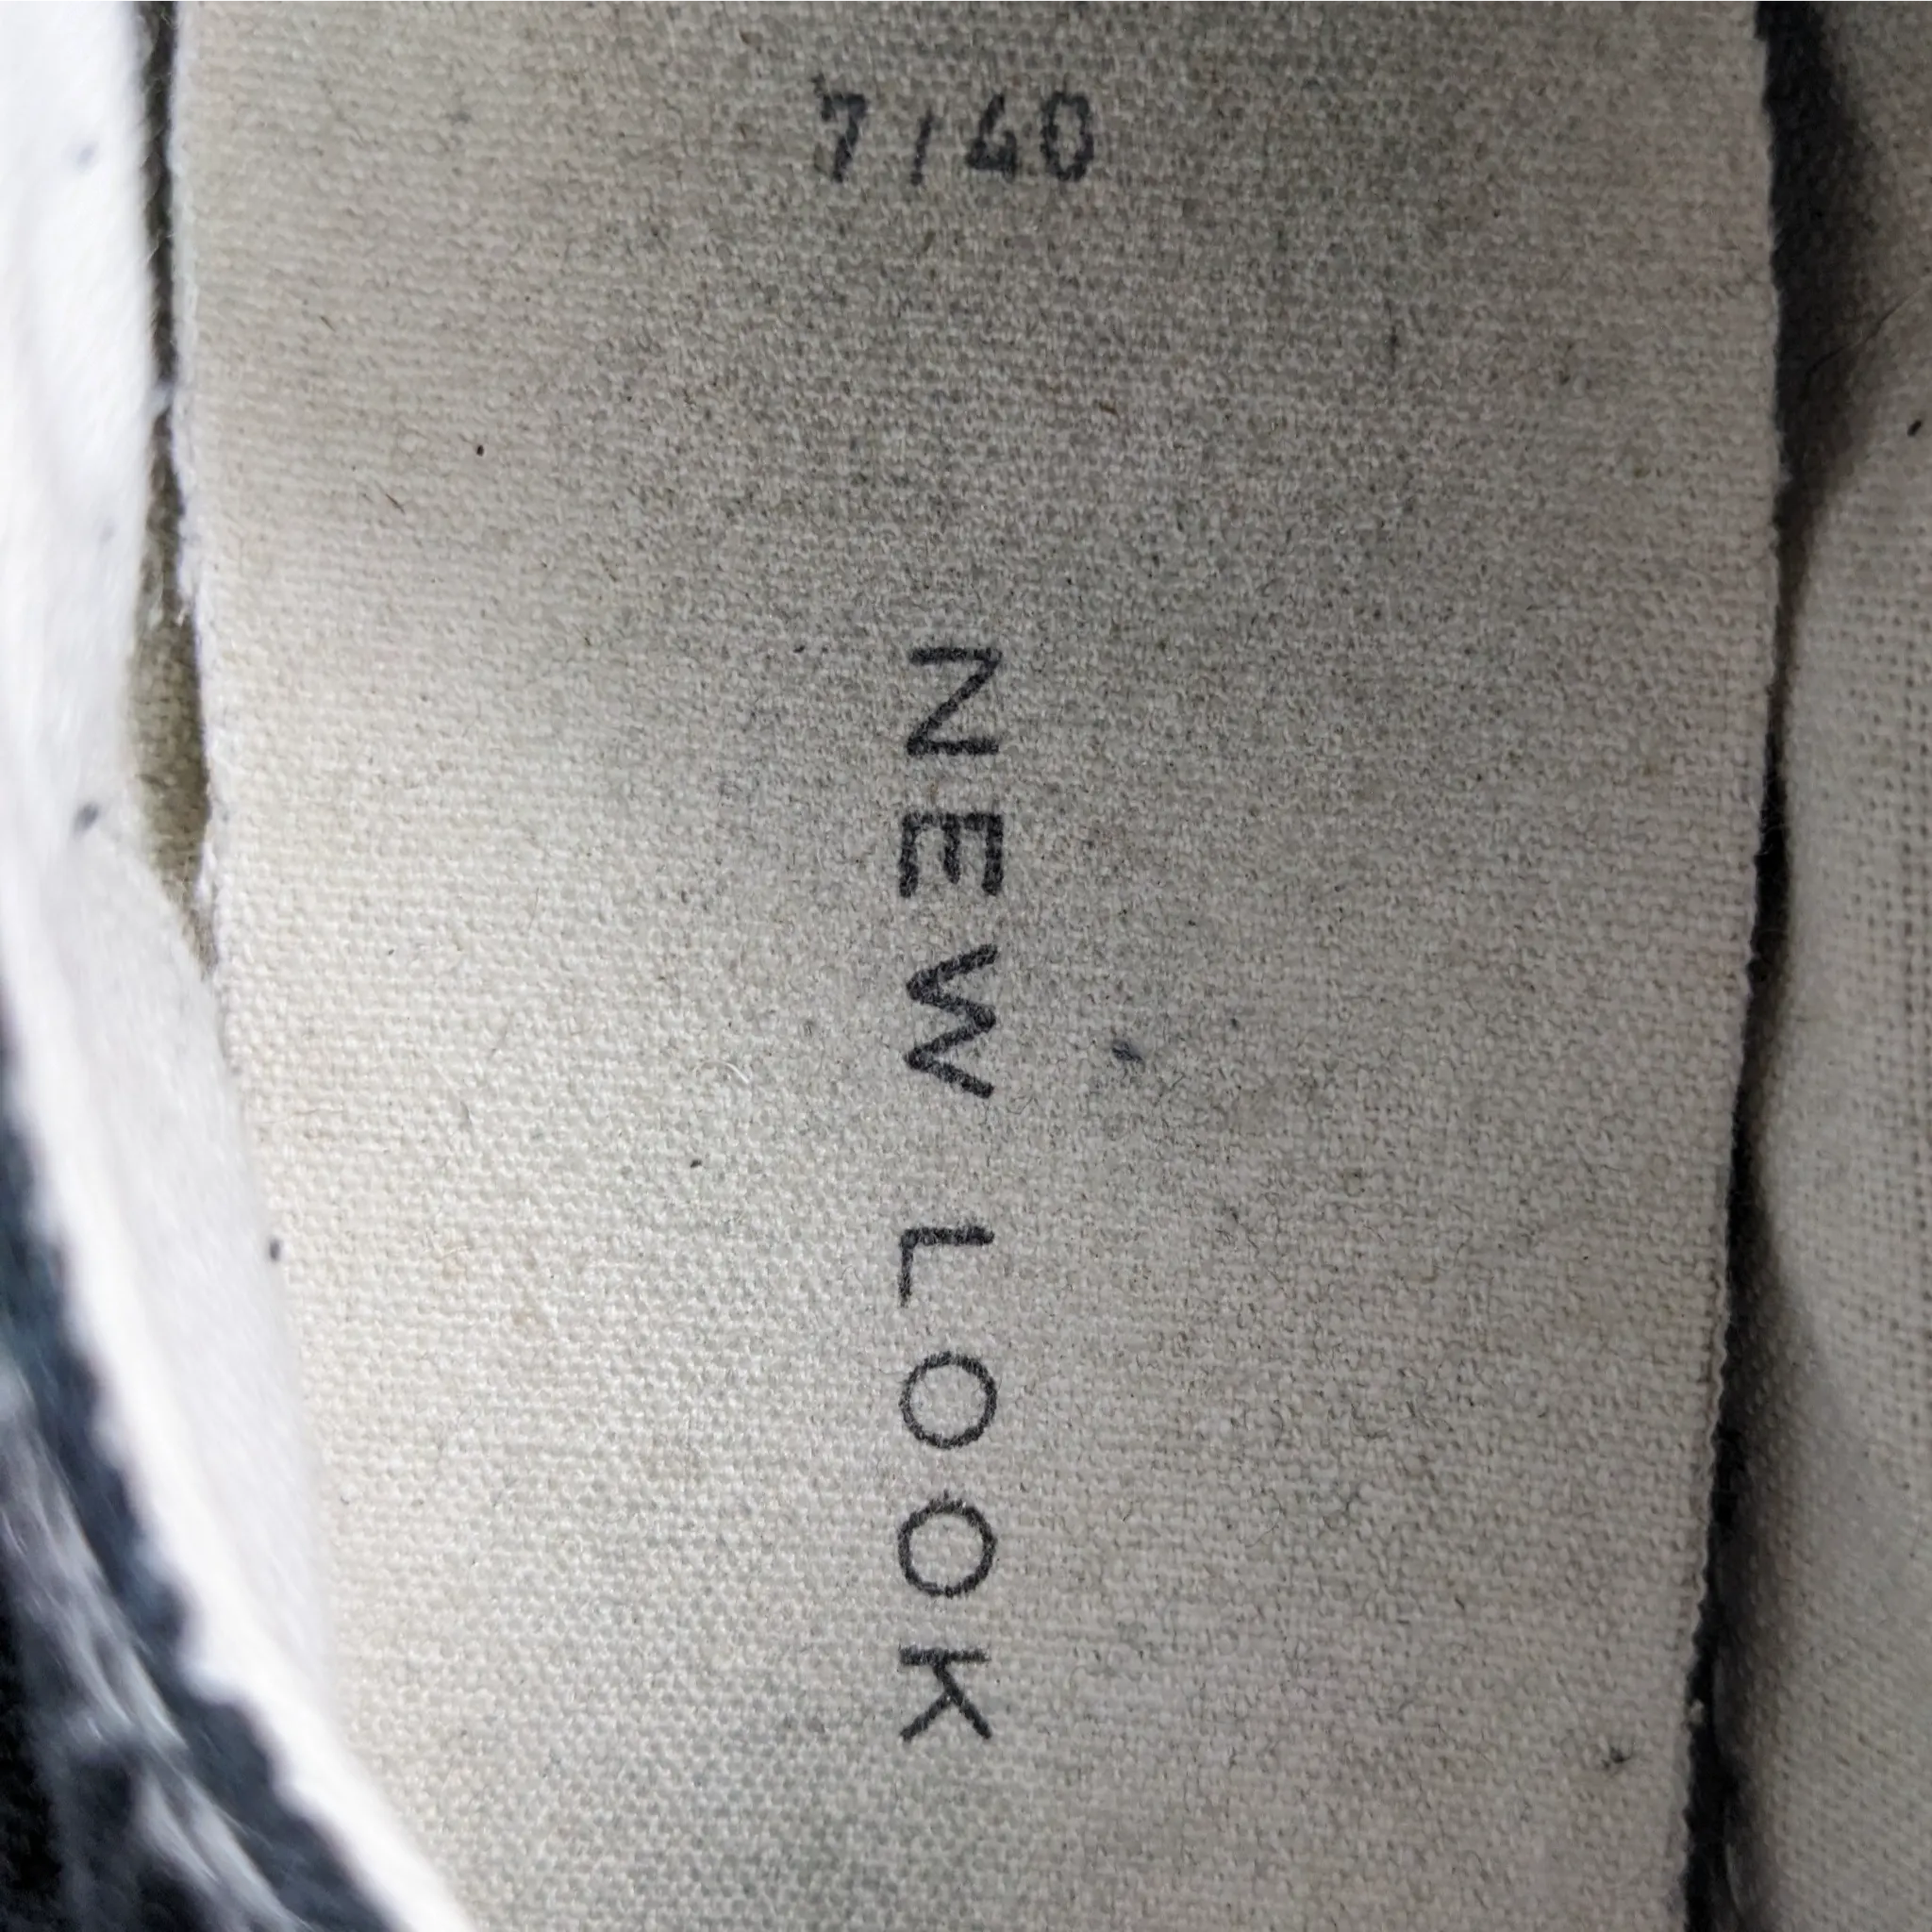 NewLook Black Sneakers Premium V